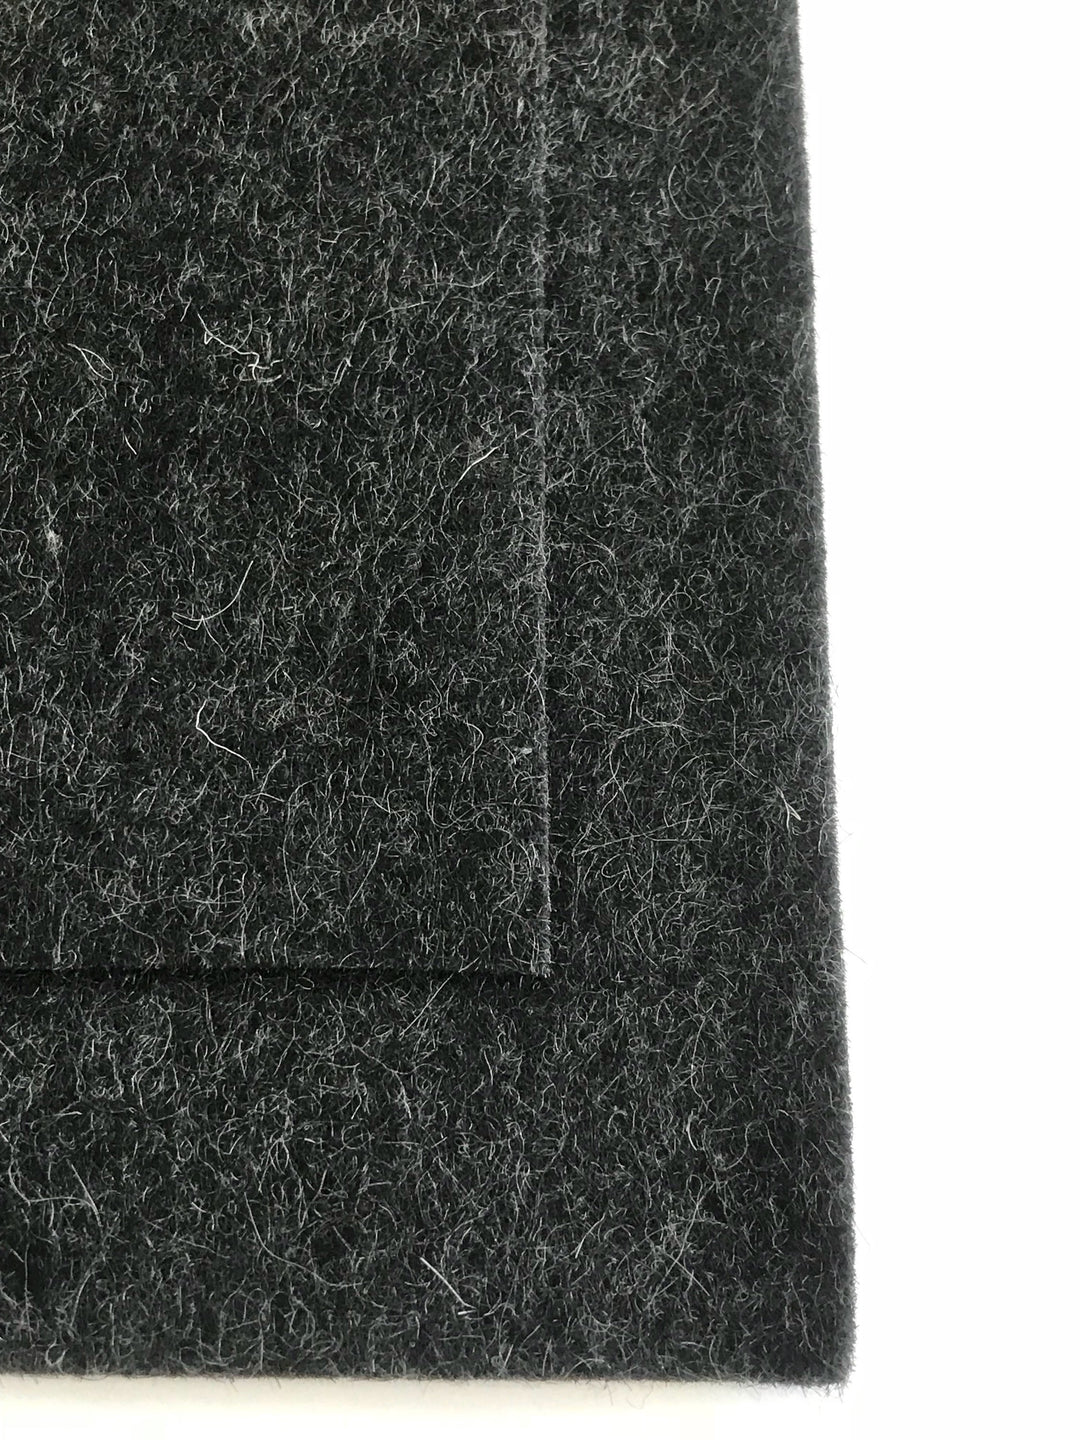 1mm Heather Charcoal Grey Fleck Merino Wool Felt 8 x 11" Sheet - No. G-1-9